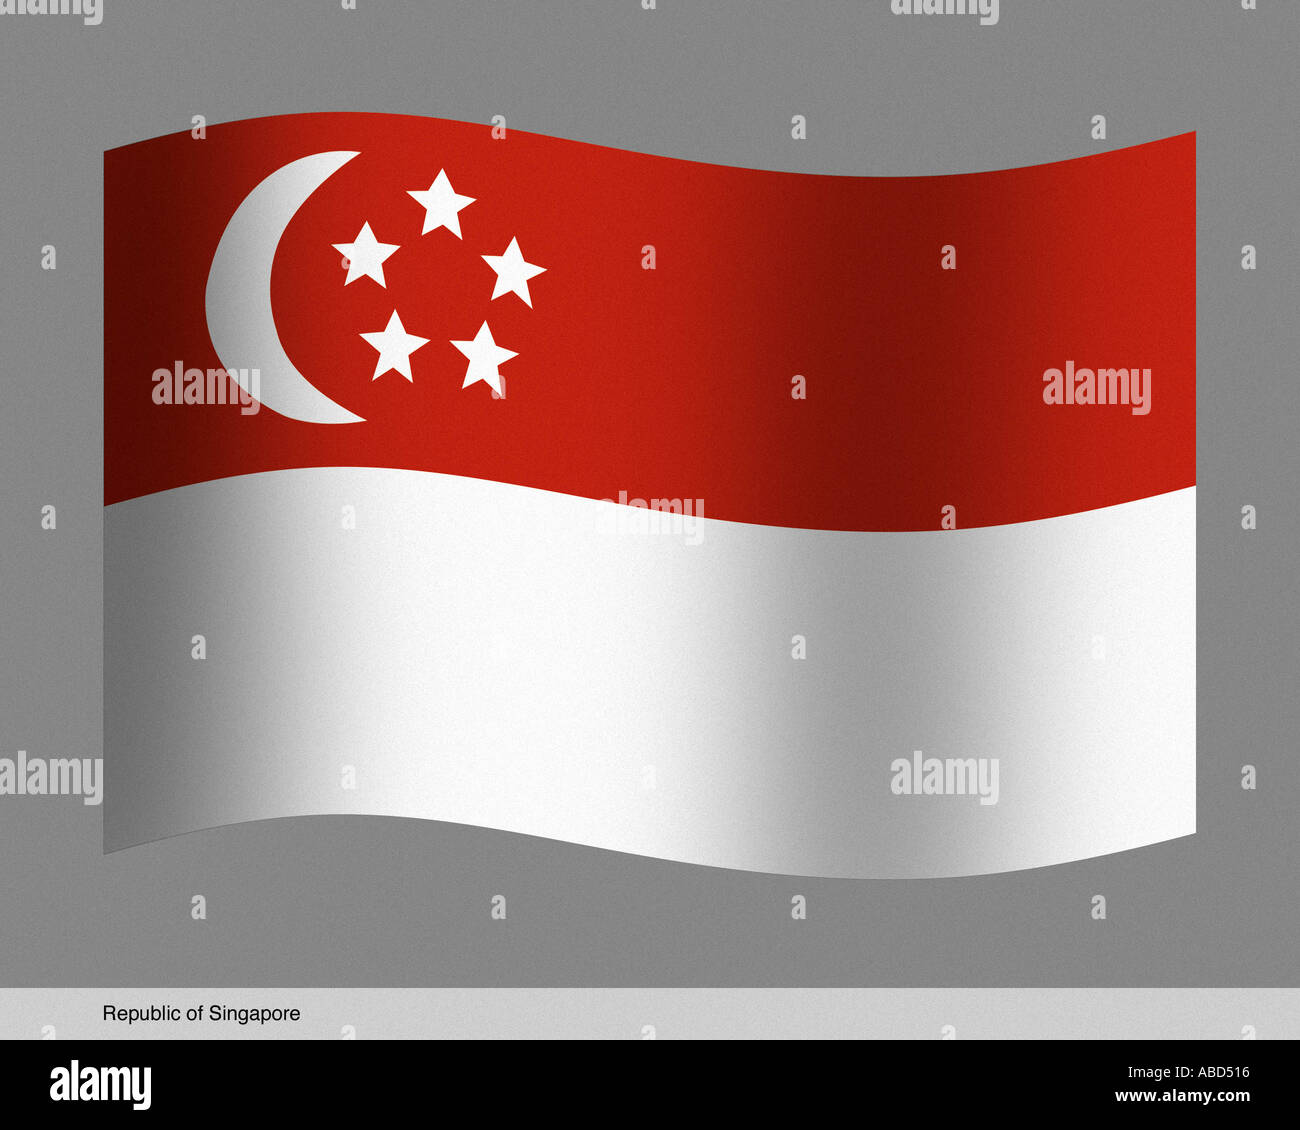 Republic of Singapore Stock Photo